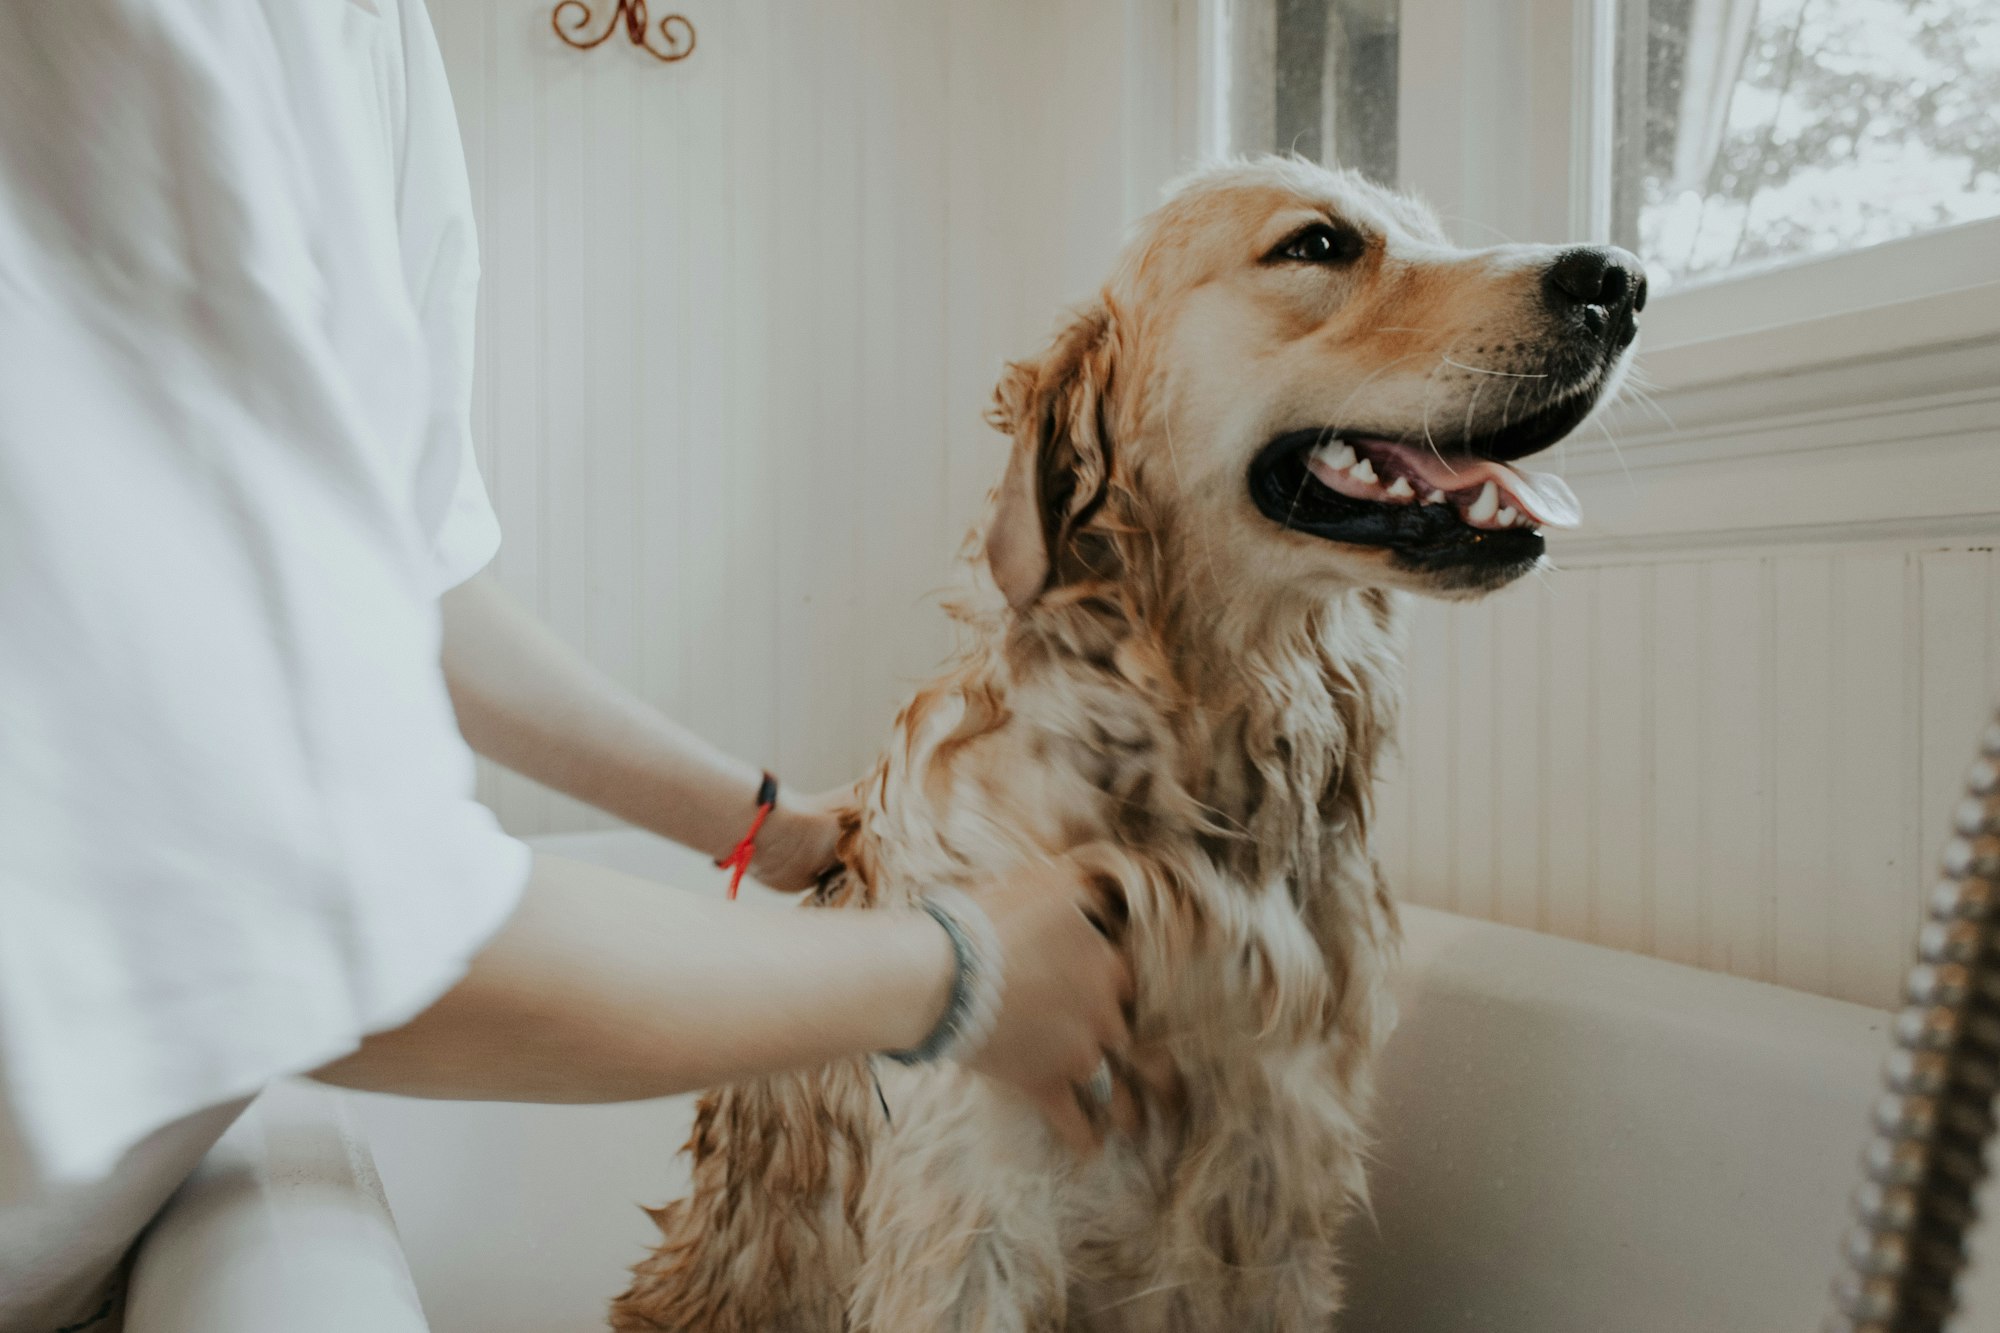 dog in bathtub - quarantine ideas HomeExchange